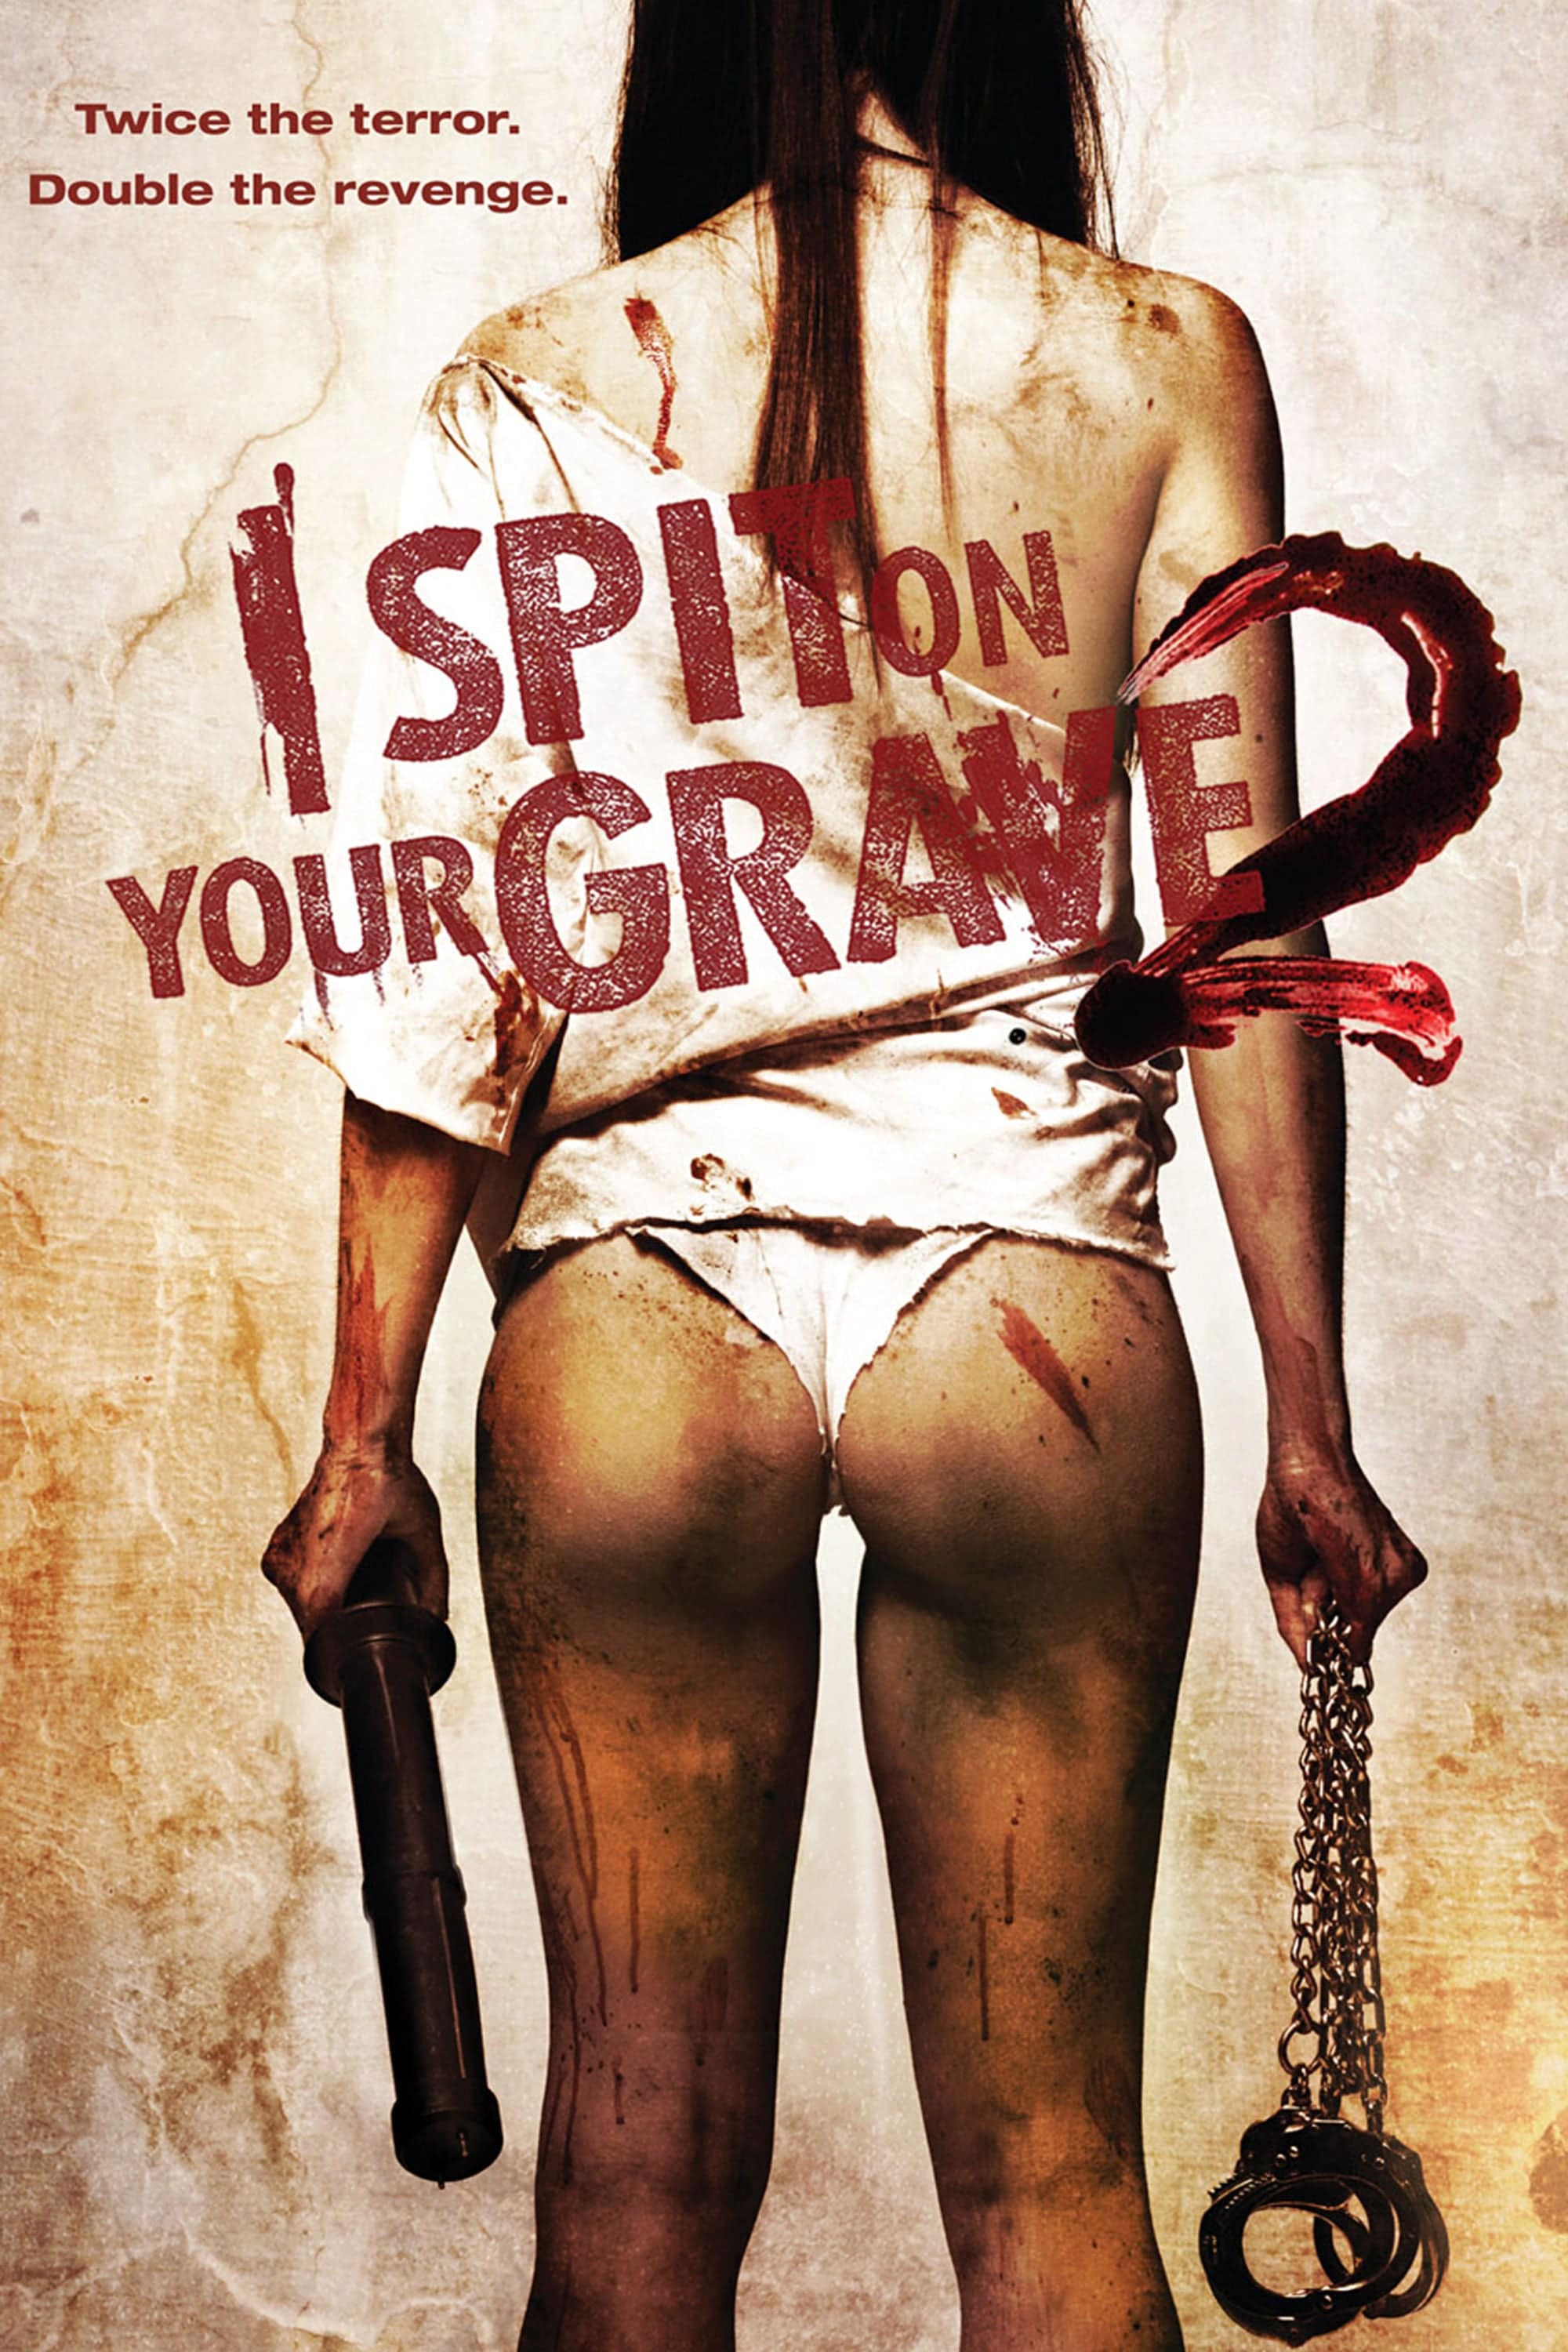 Plakat von "I Spit on Your Grave 2"